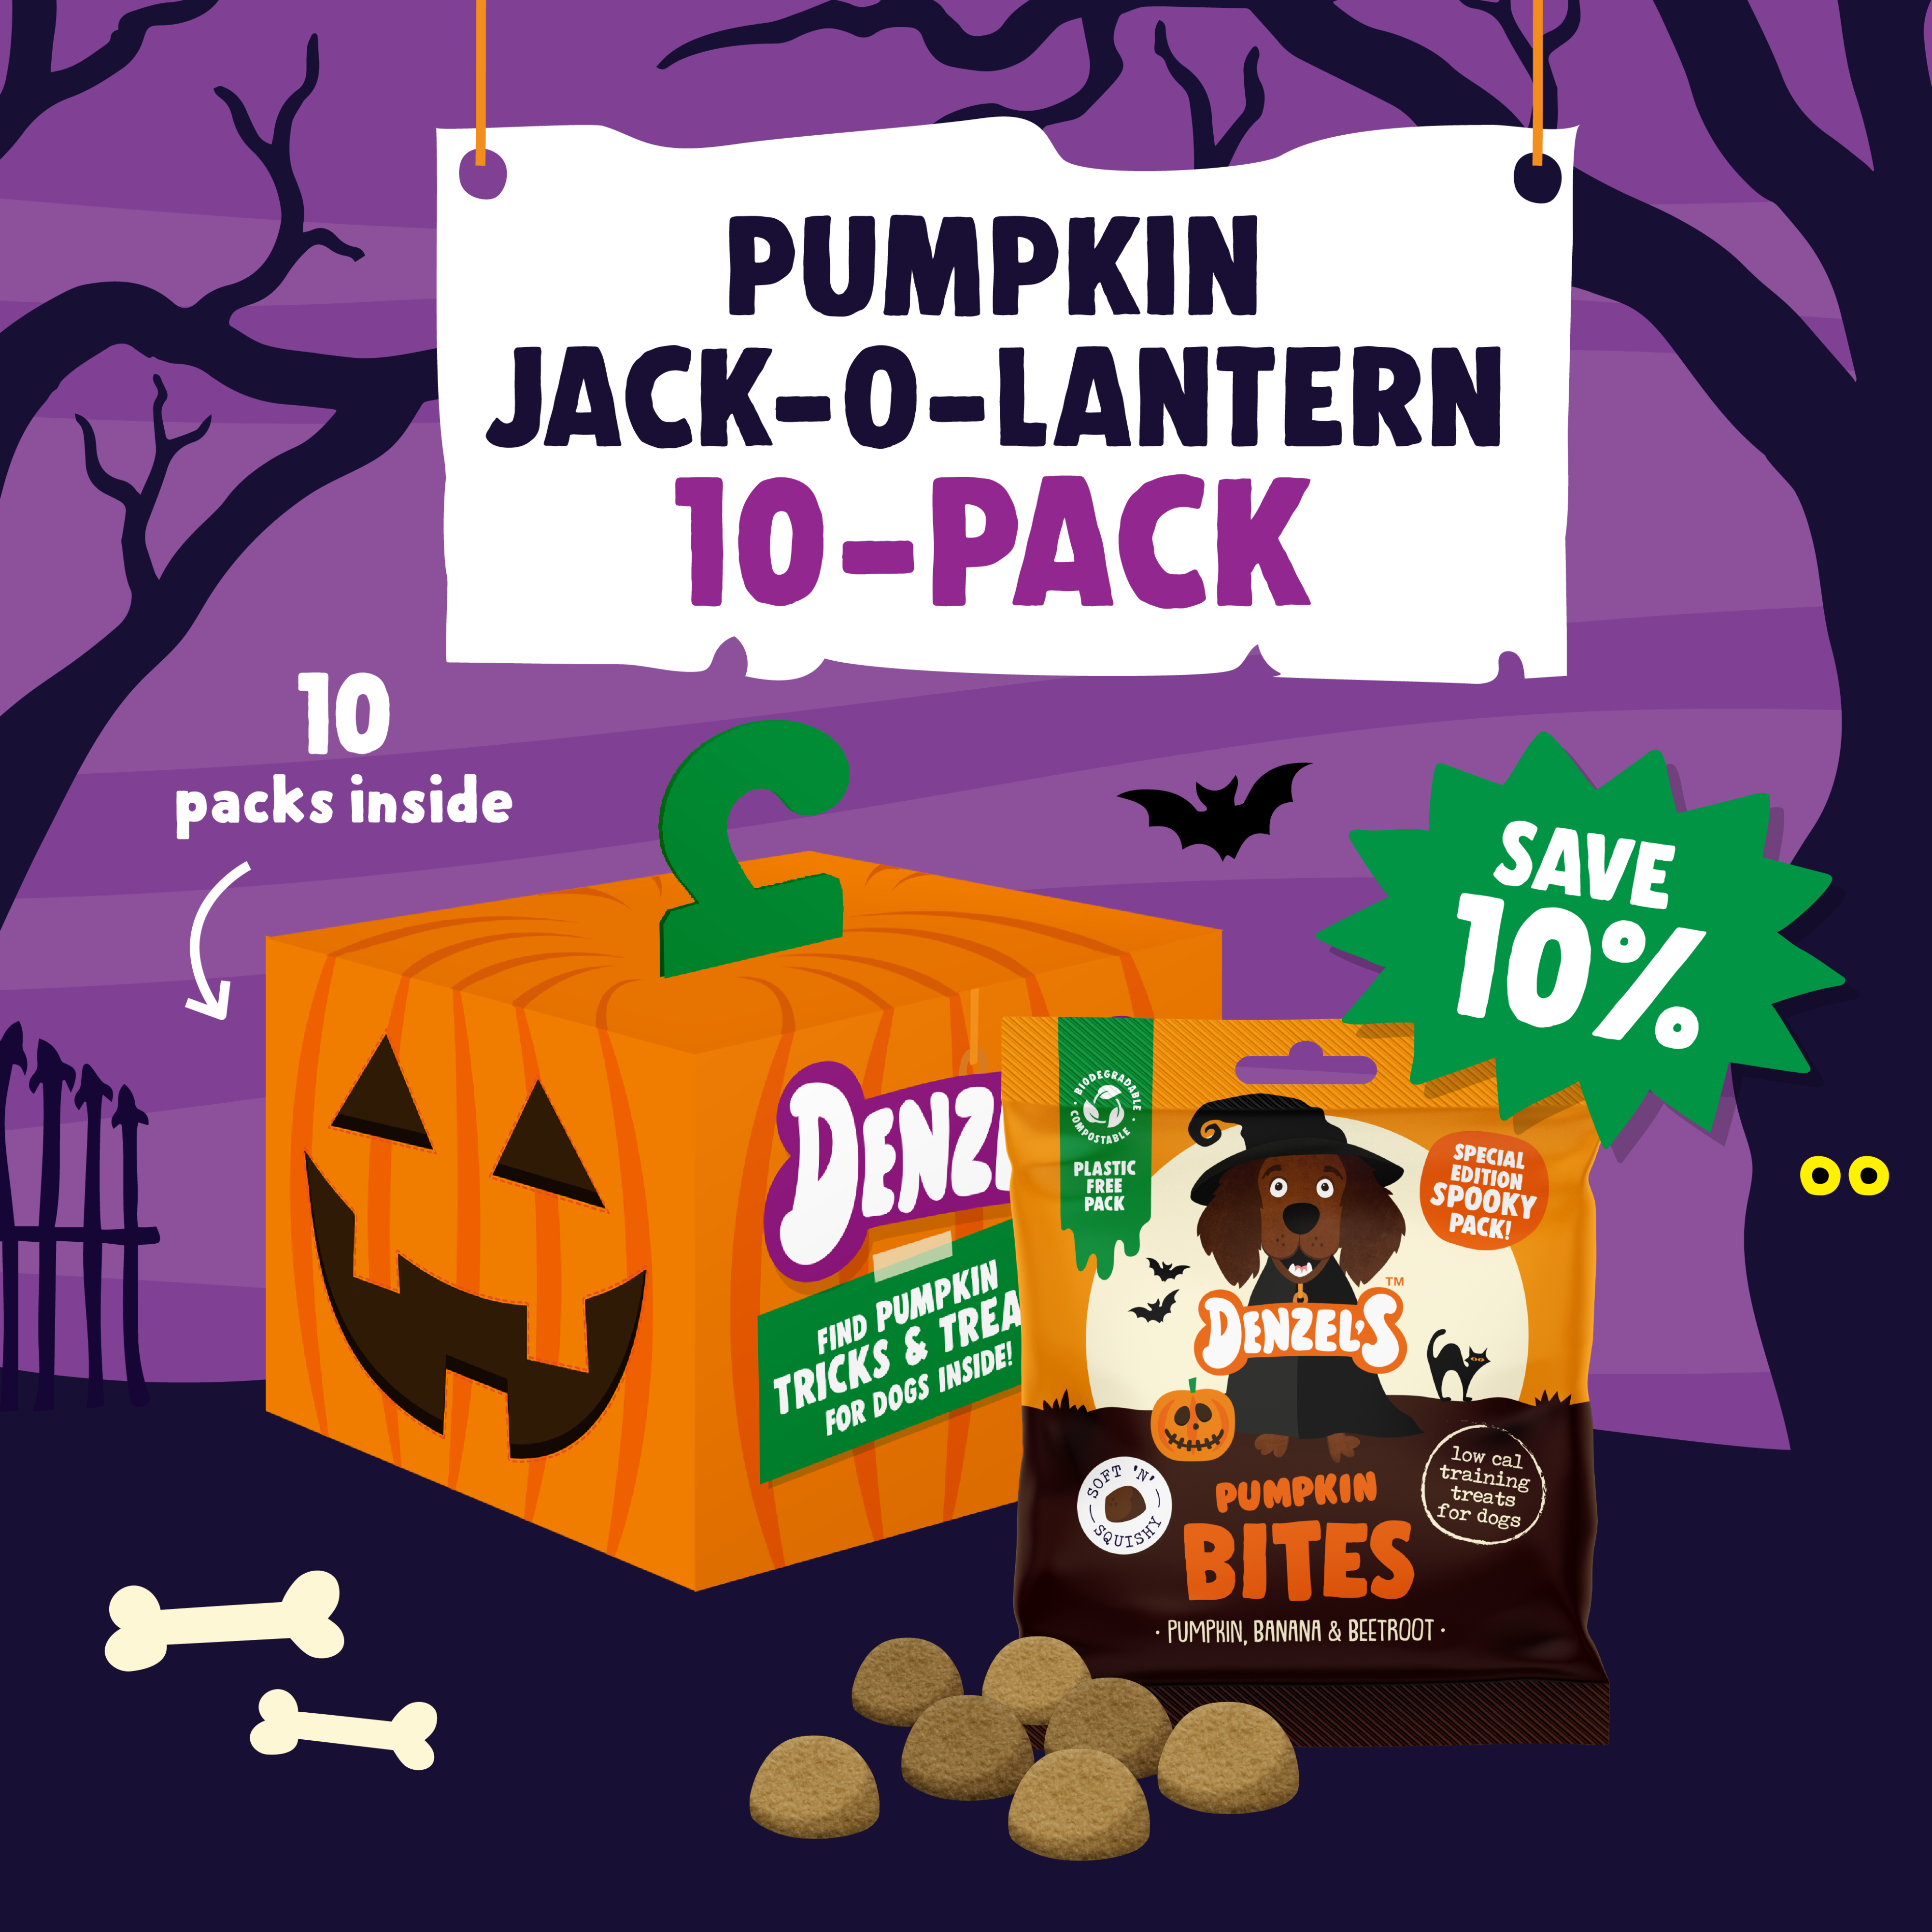 Jack-o'-lantern of Pumpkin Bites 10-Pack